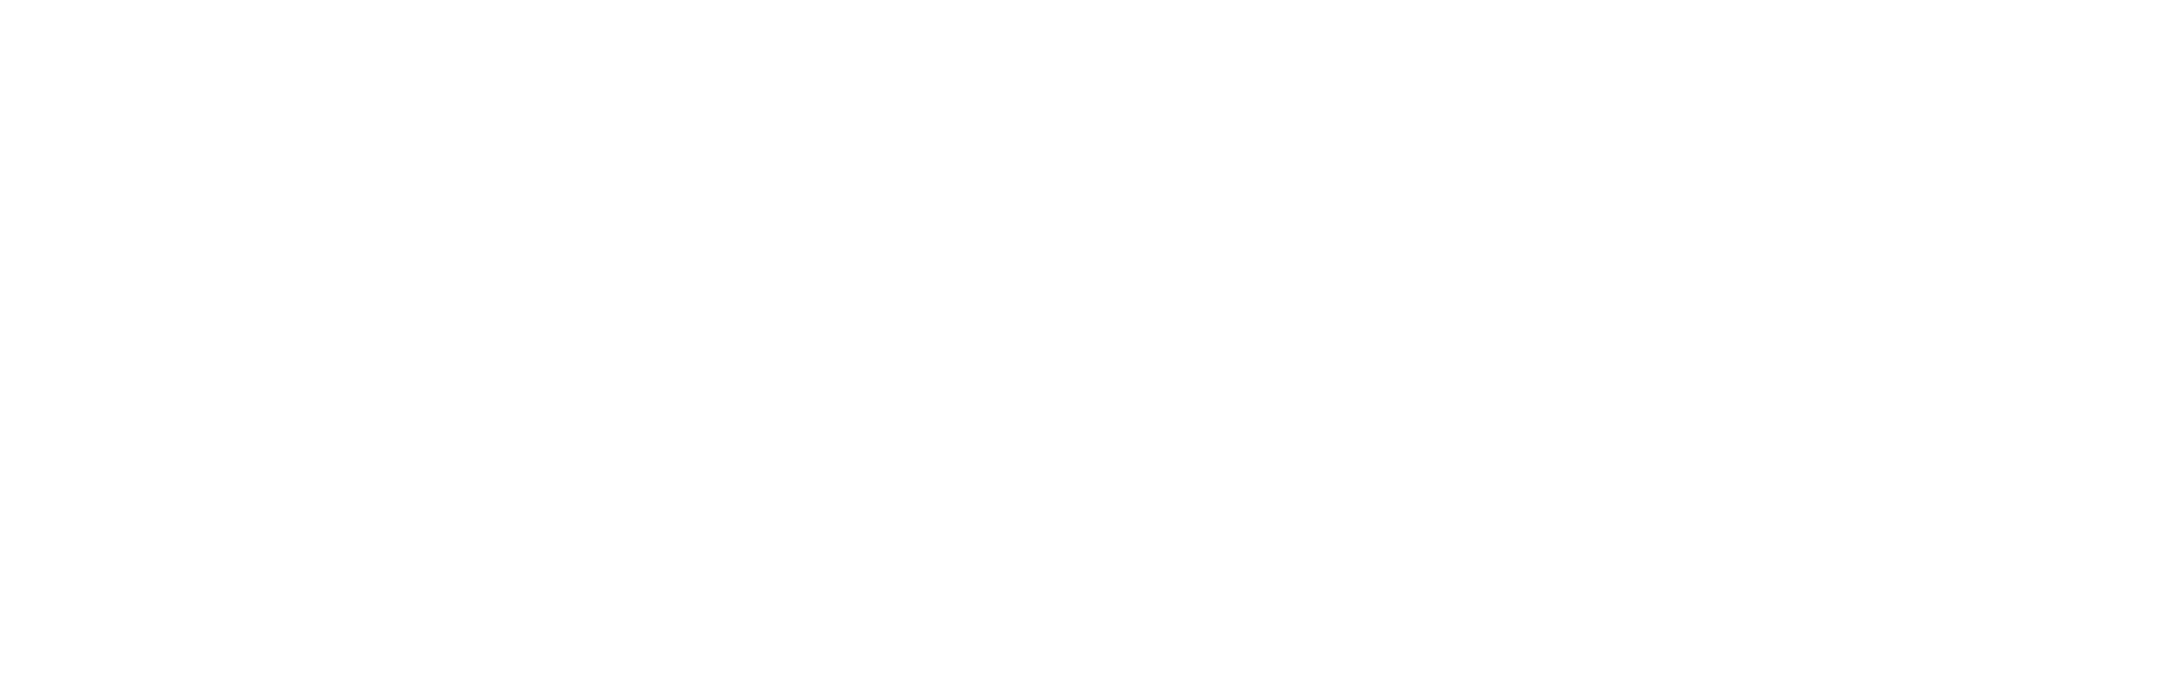 APEX program for school leadership